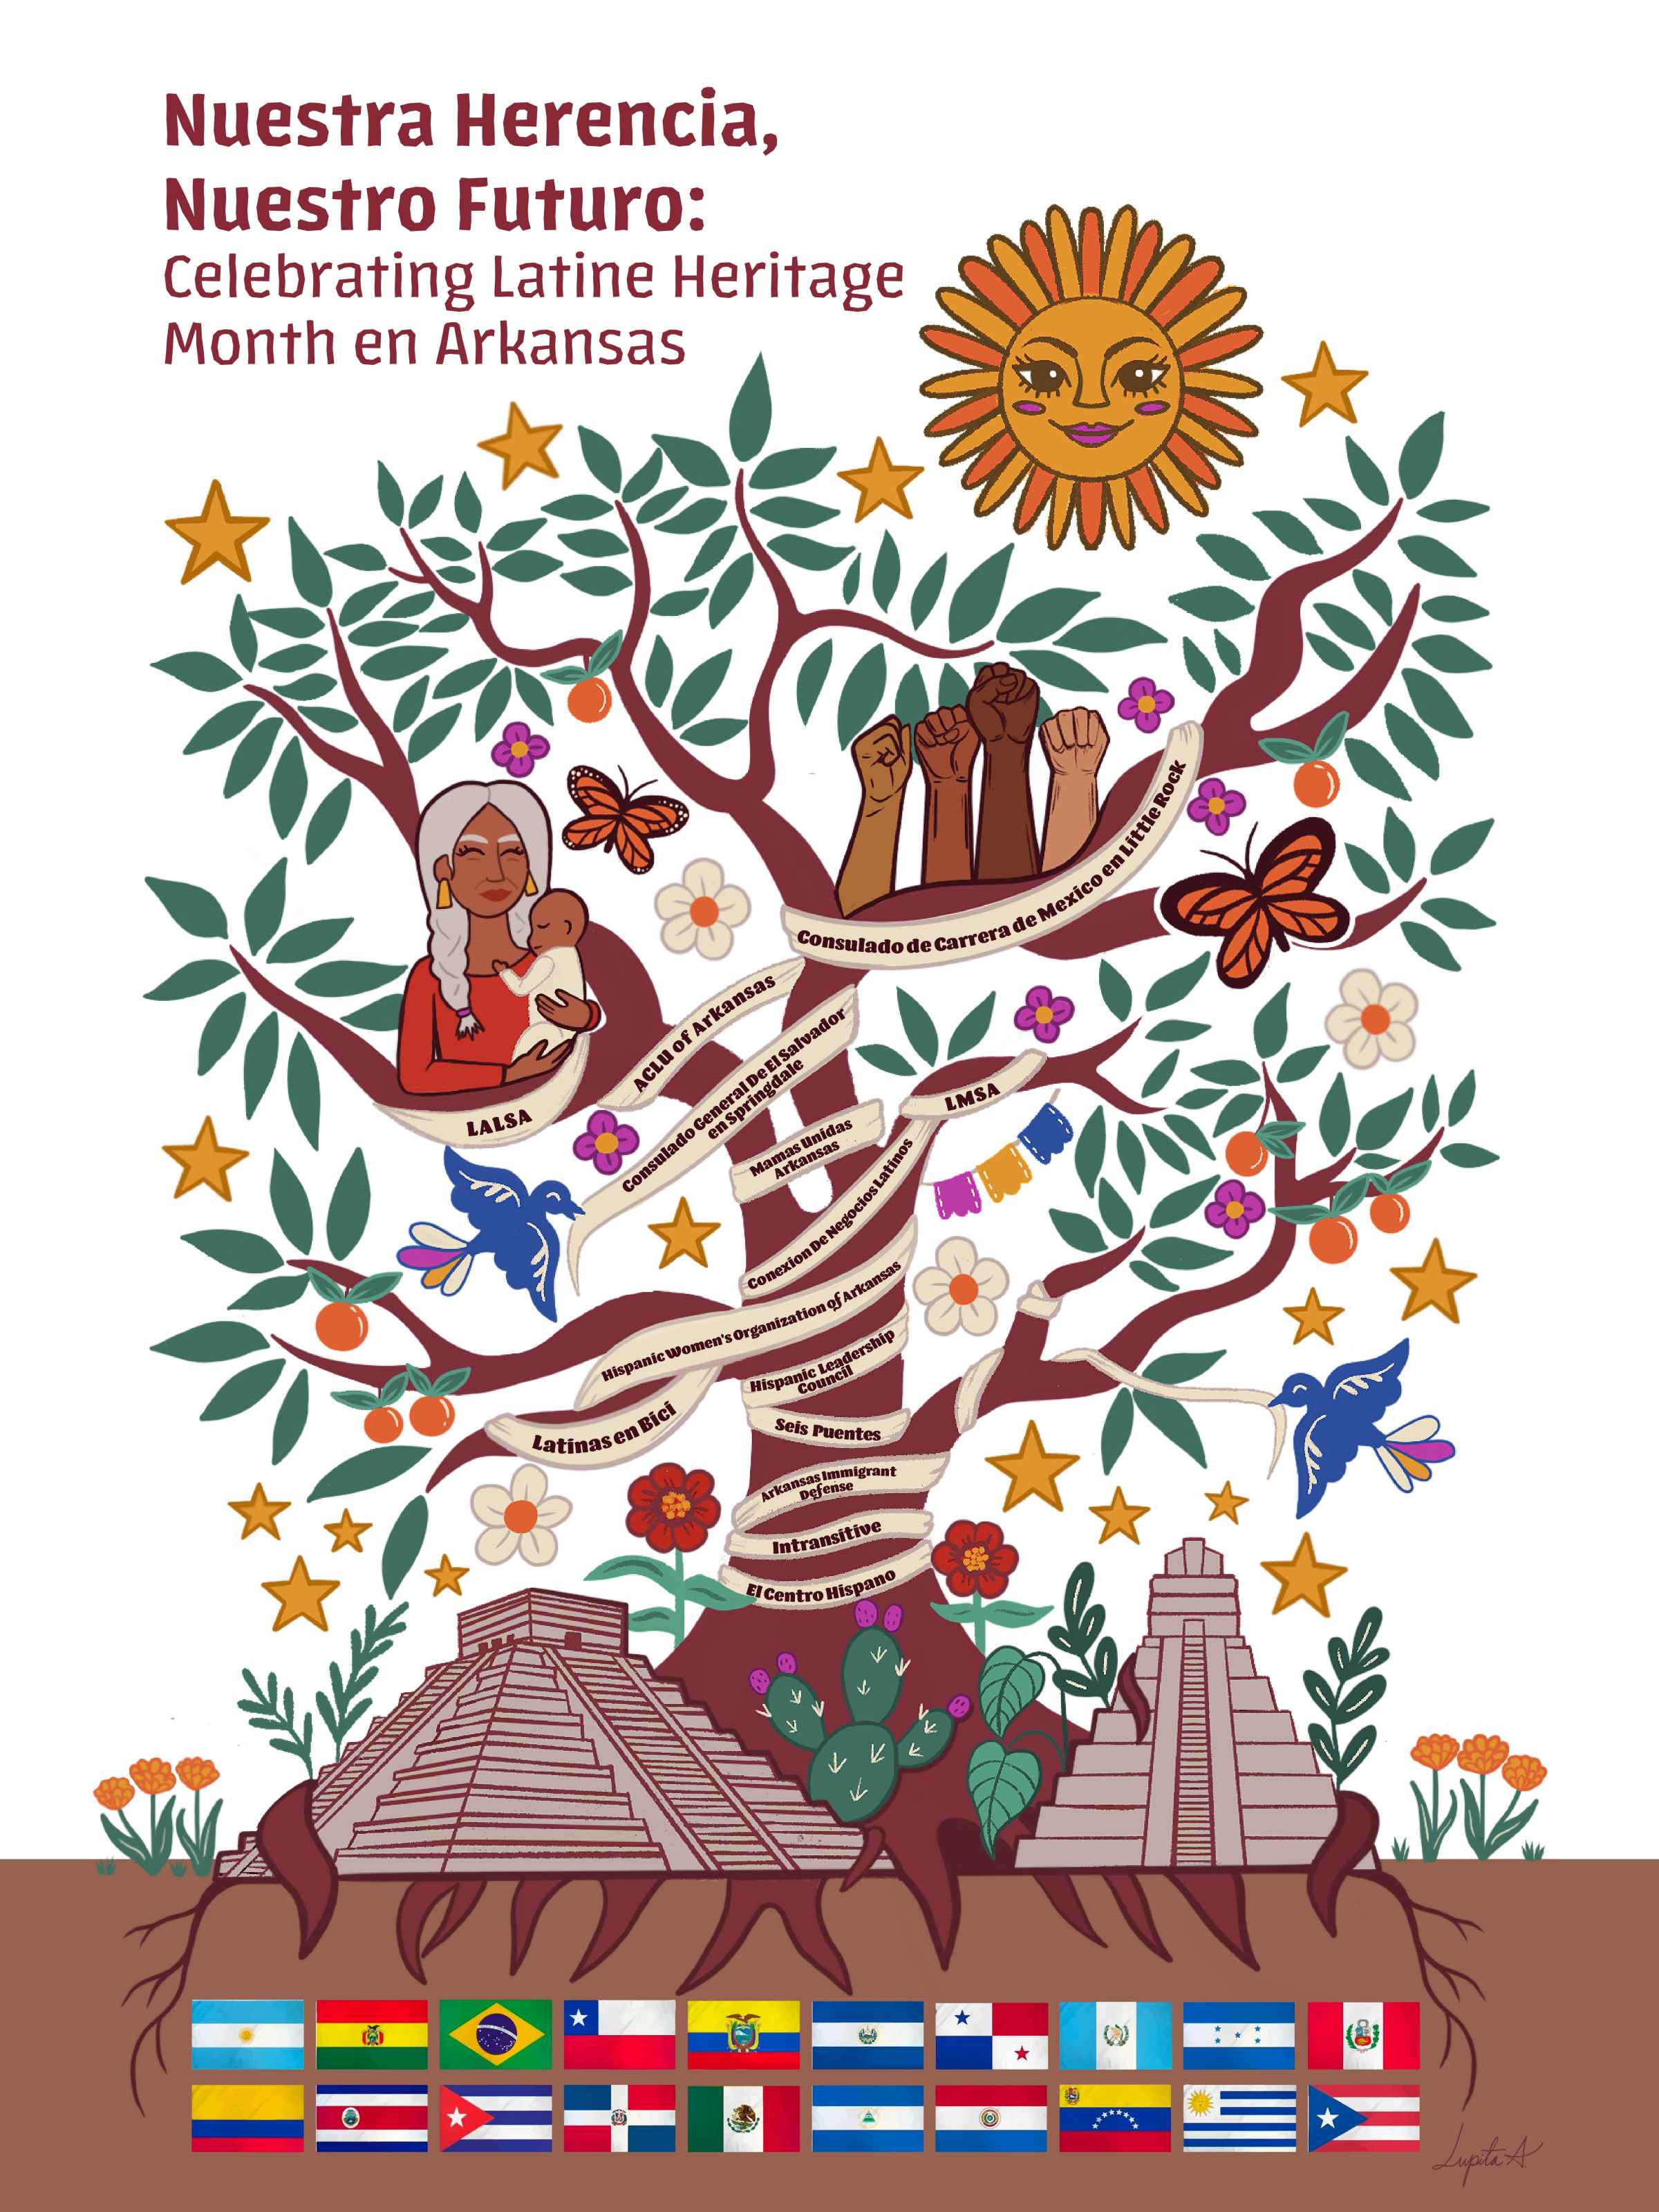 ACLU-AR celebrates Latine Heritage Month